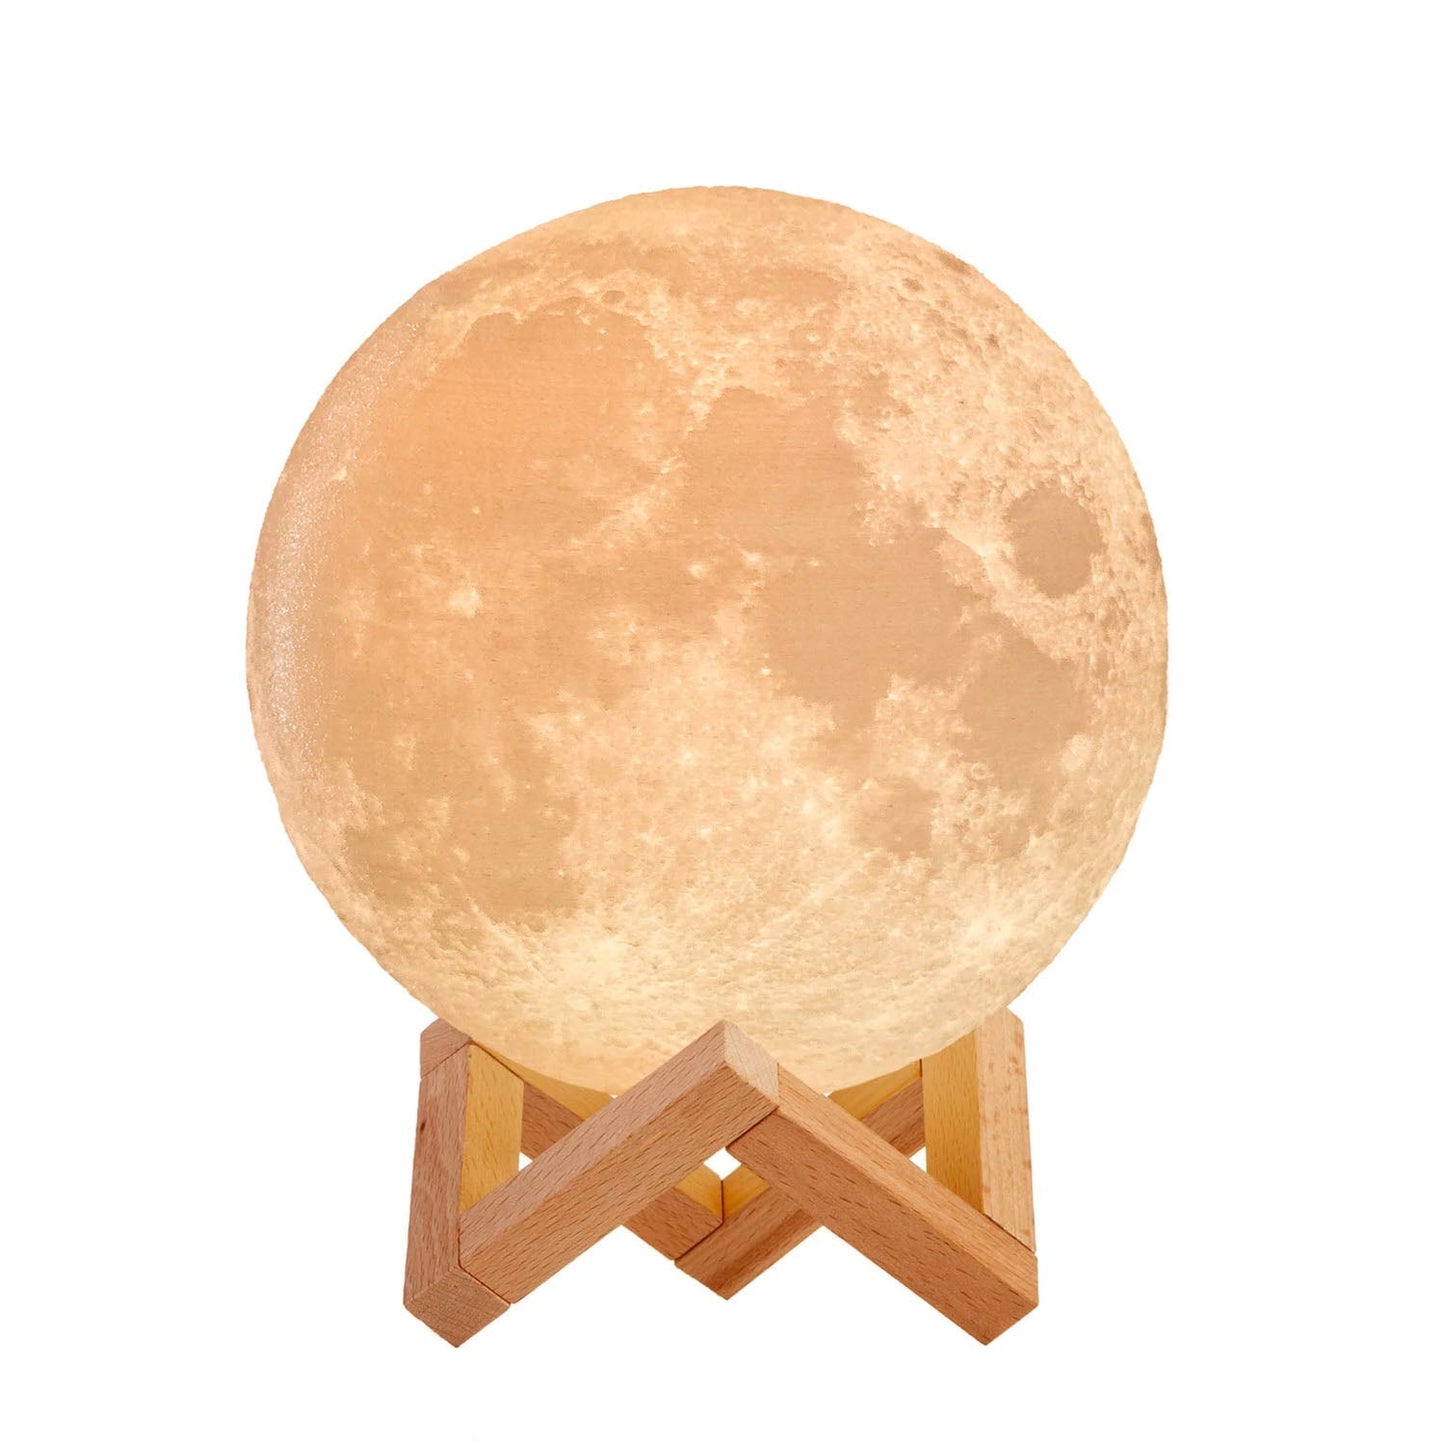 Moon Lamp Decor Latest Aesthetics Midsize Moon – 5.9 inch 